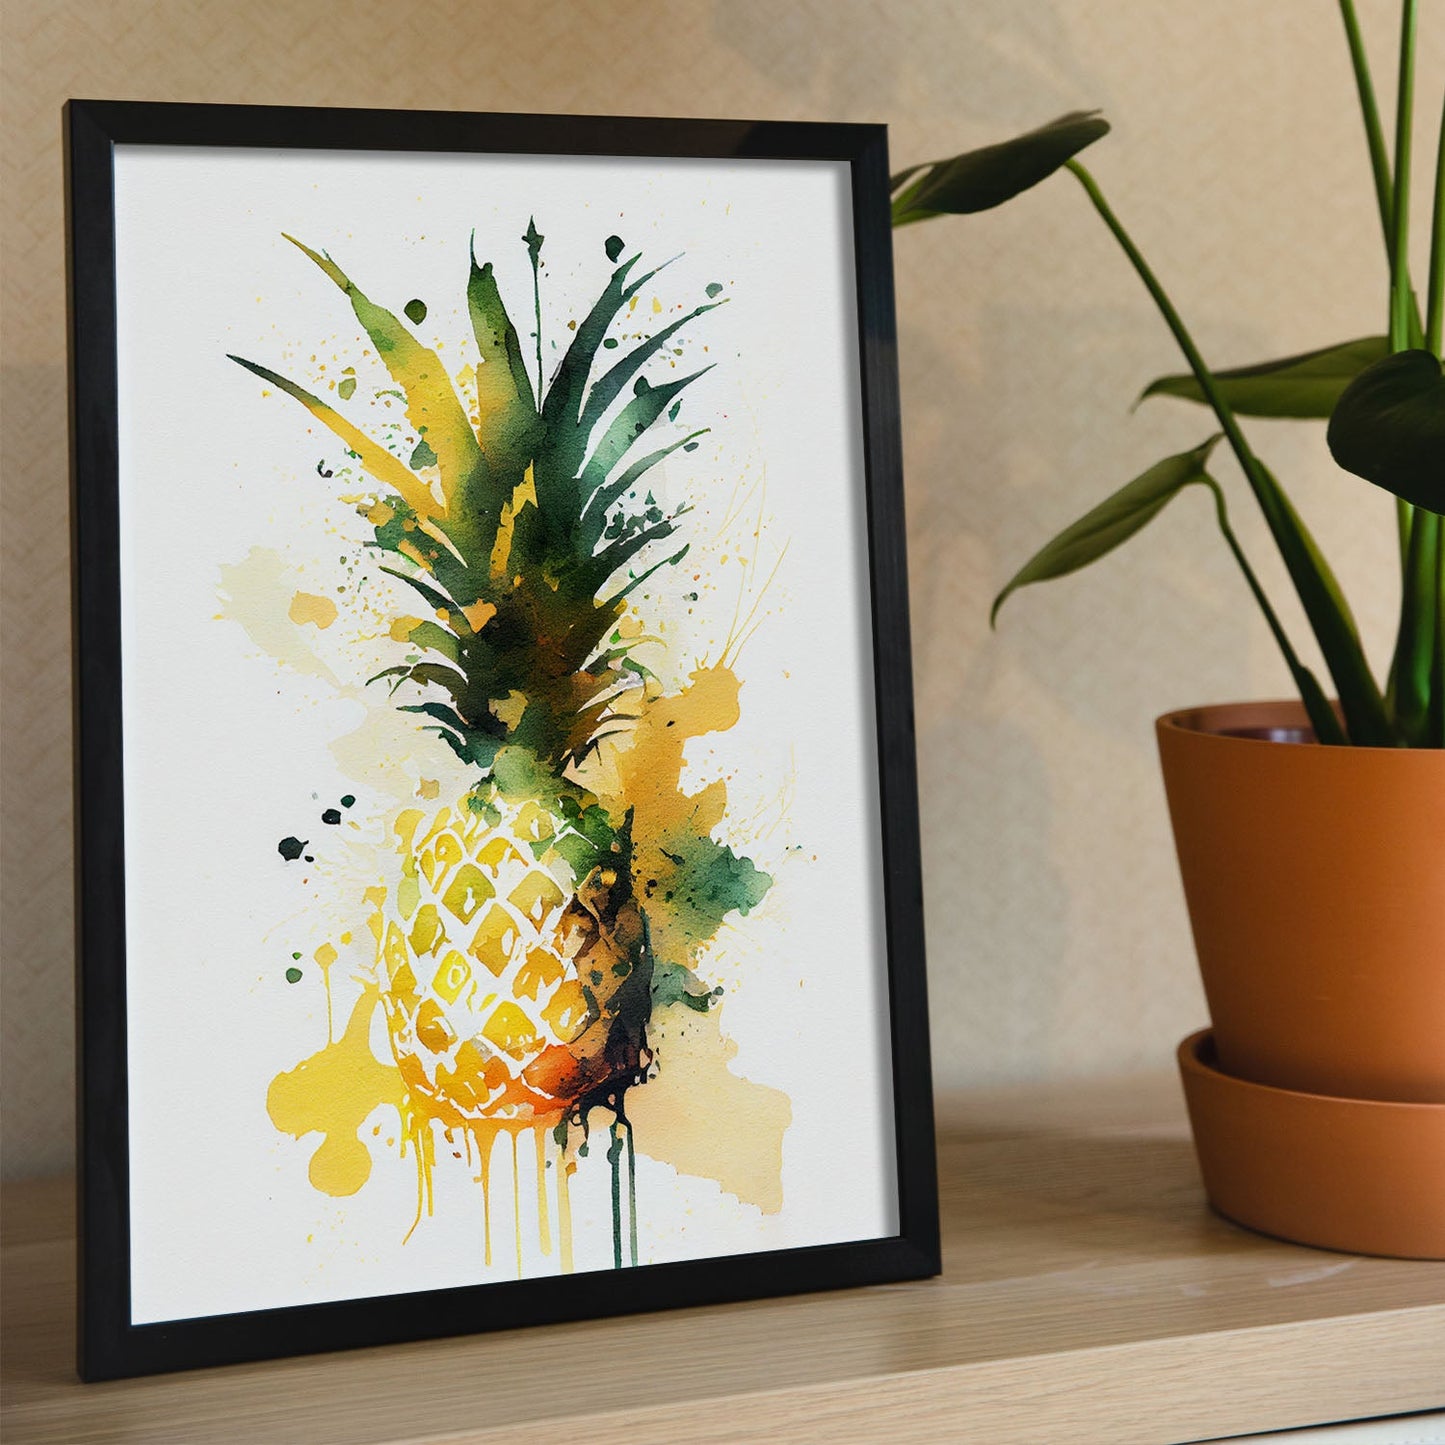 Nacnic minimalist Pineapple_7. Aesthetic Wall Art Prints for Bedroom or Living Room Design.-Artwork-Nacnic-A4-Sin Marco-Nacnic Estudio SL